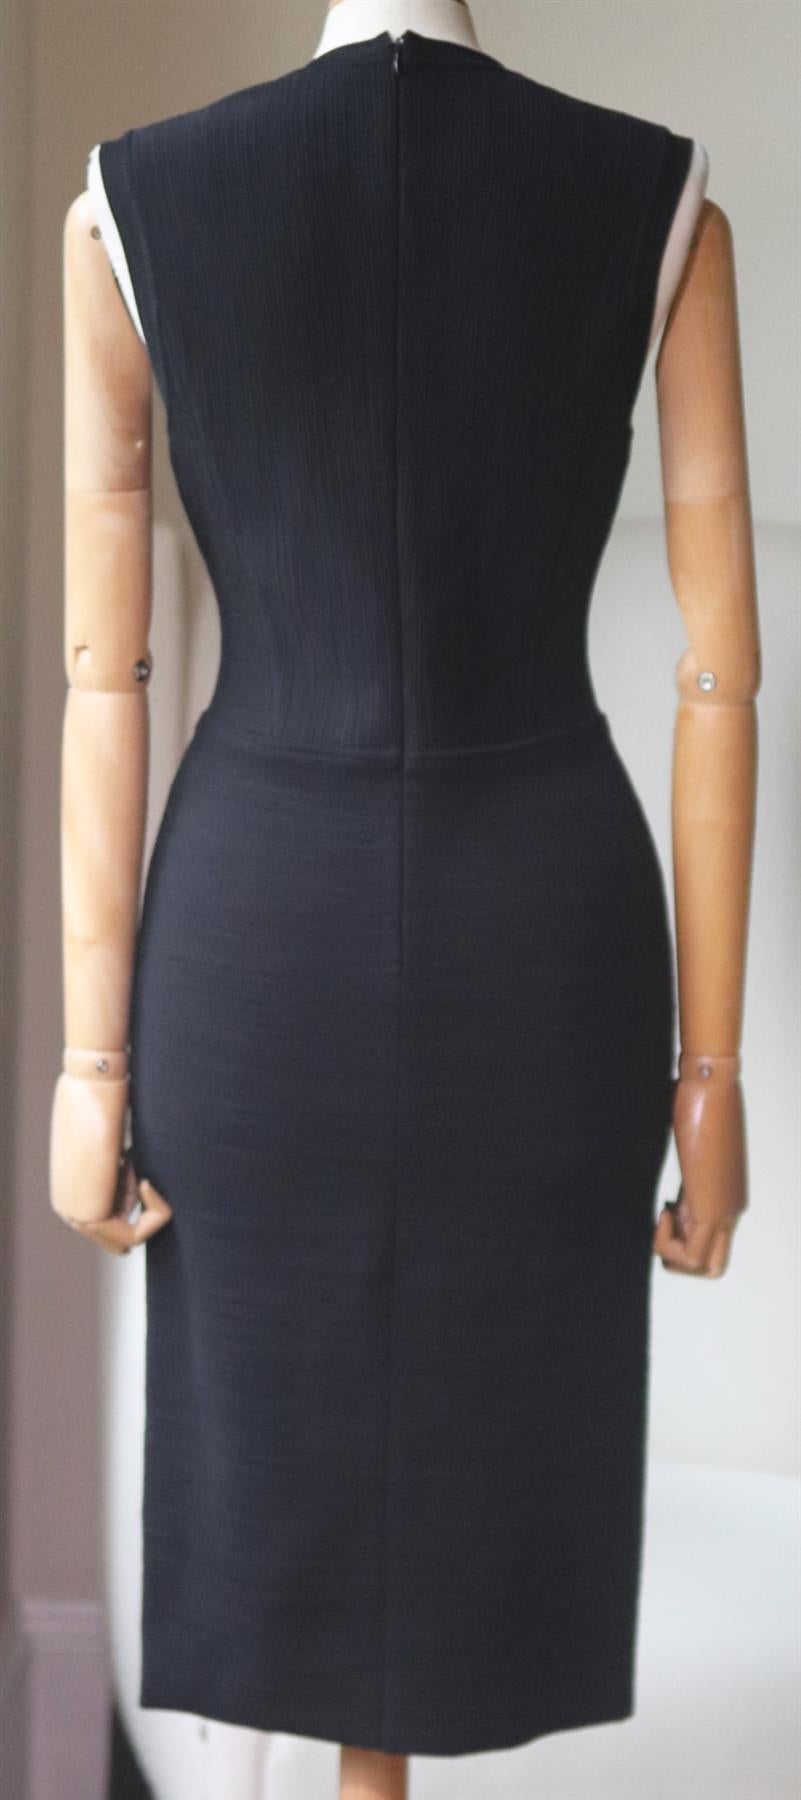 Black Givenchy Textured Stretch Knit Dress